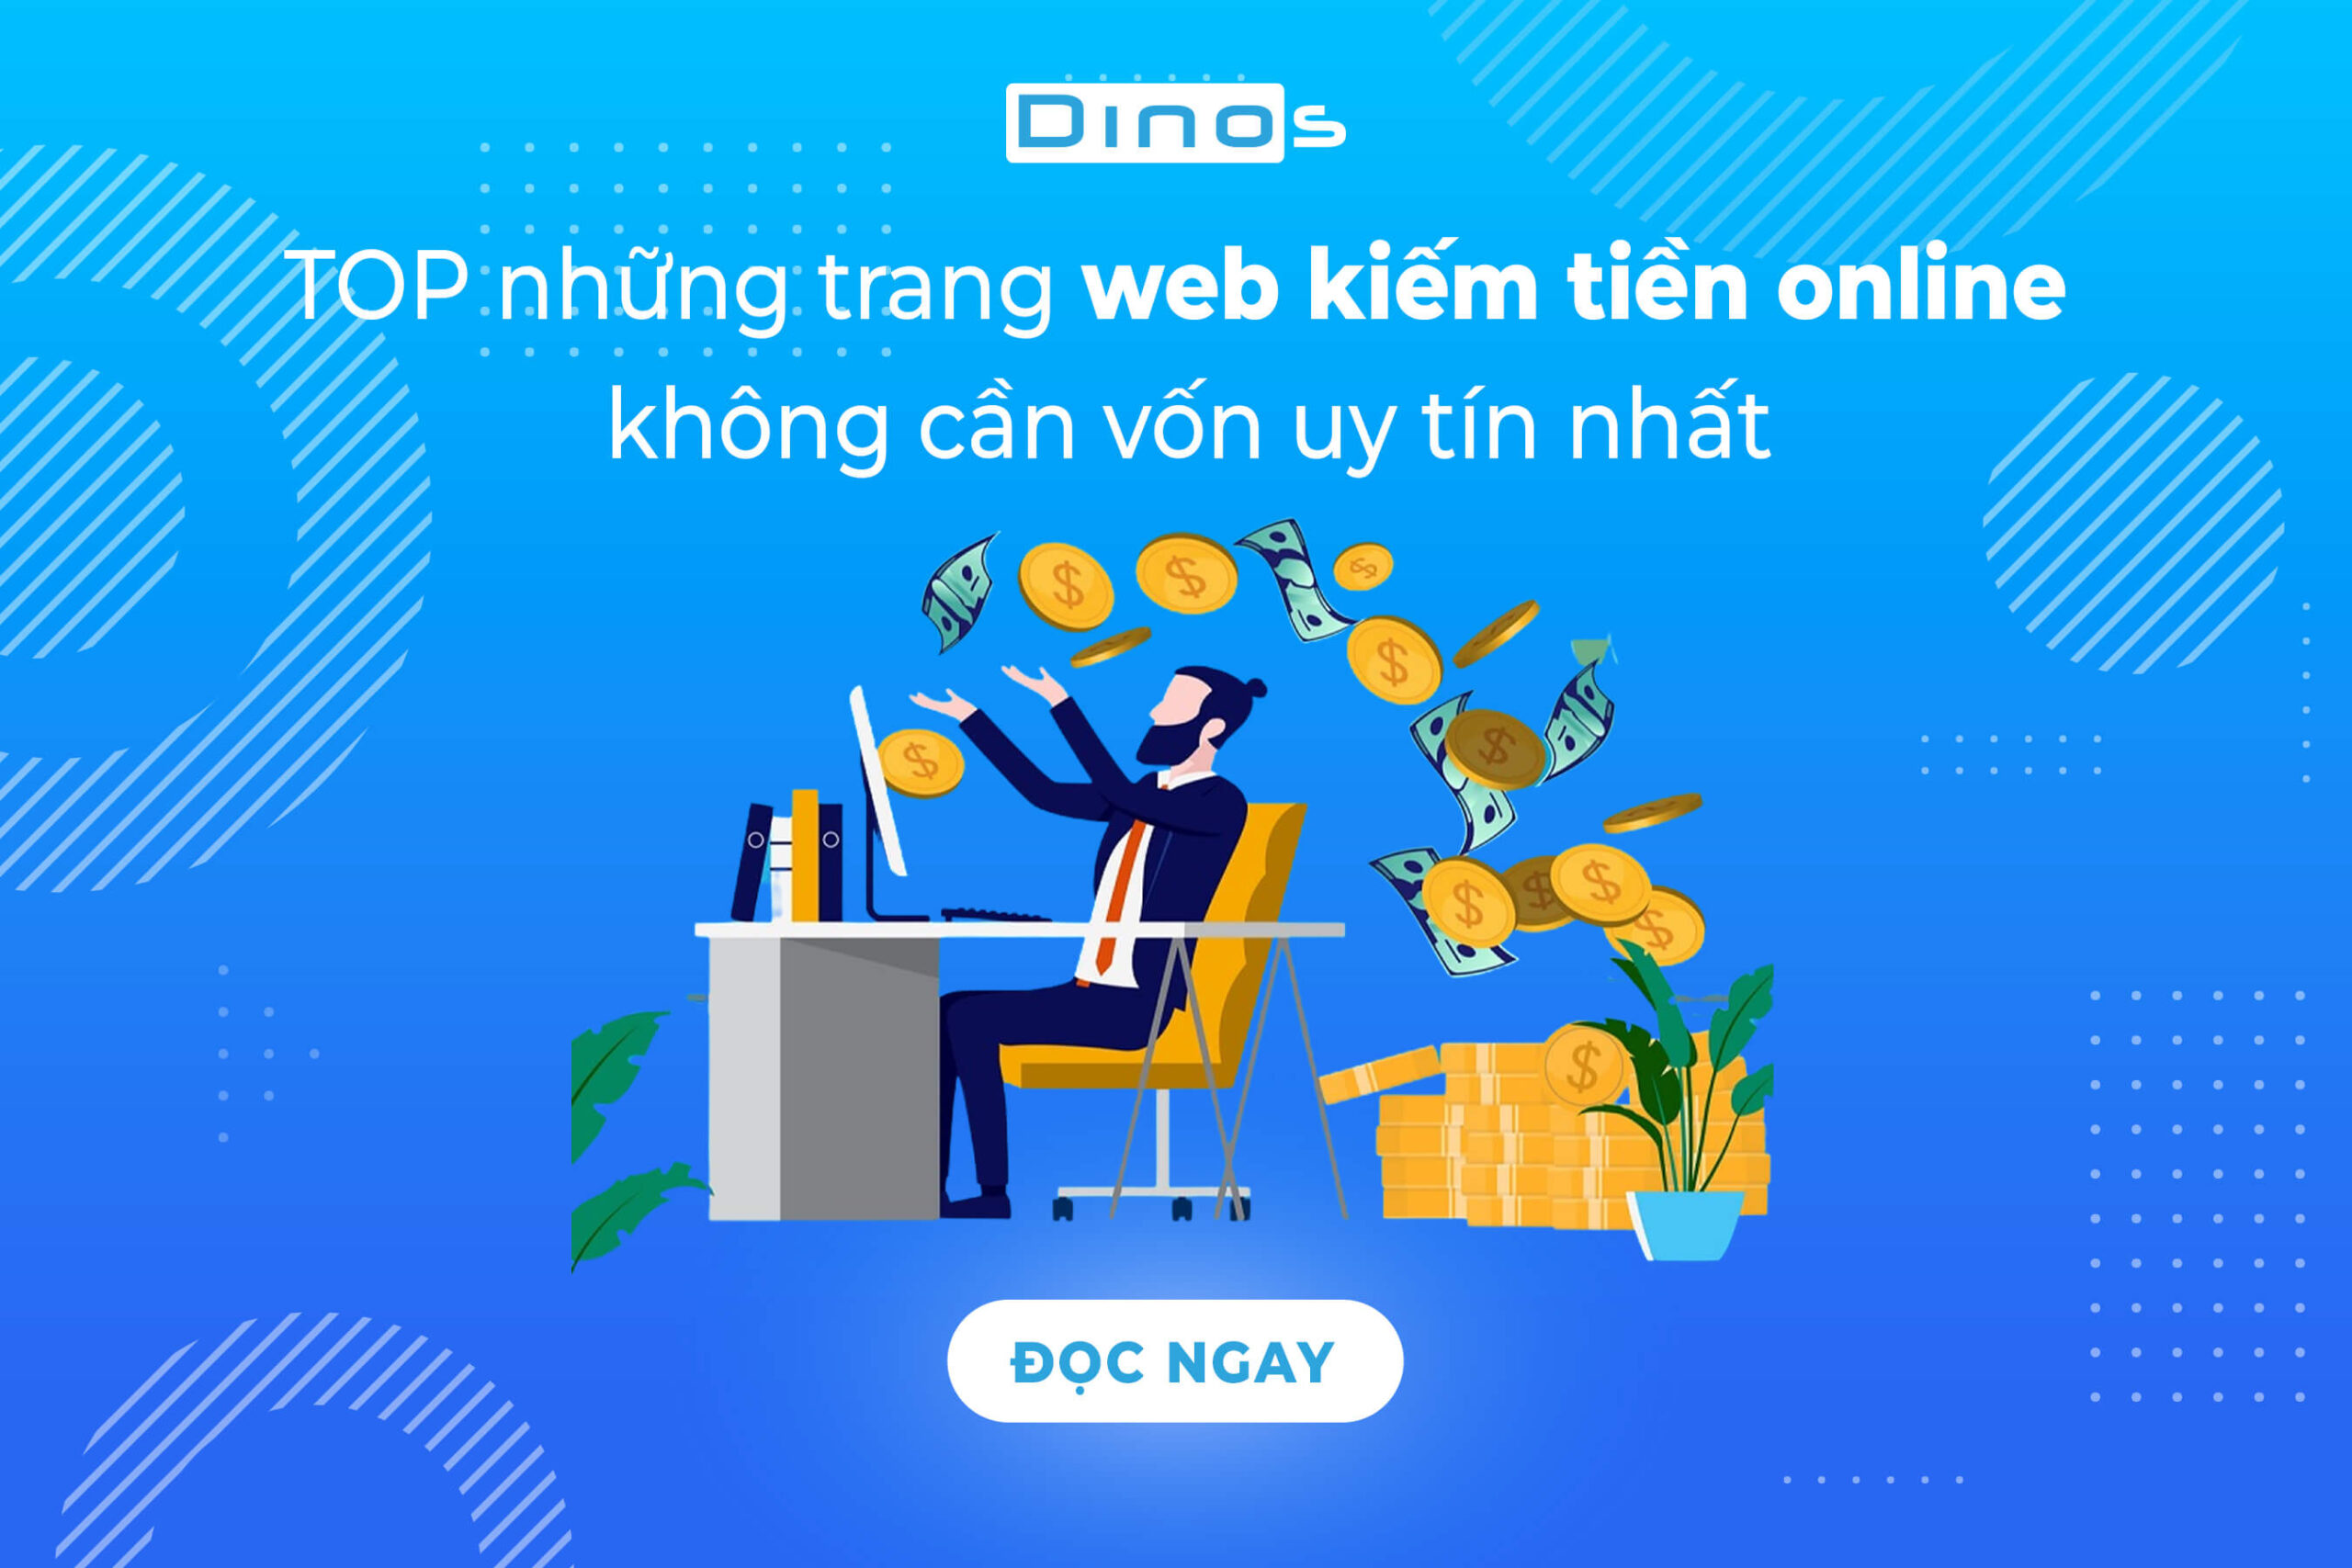 Web kiếm tiền online